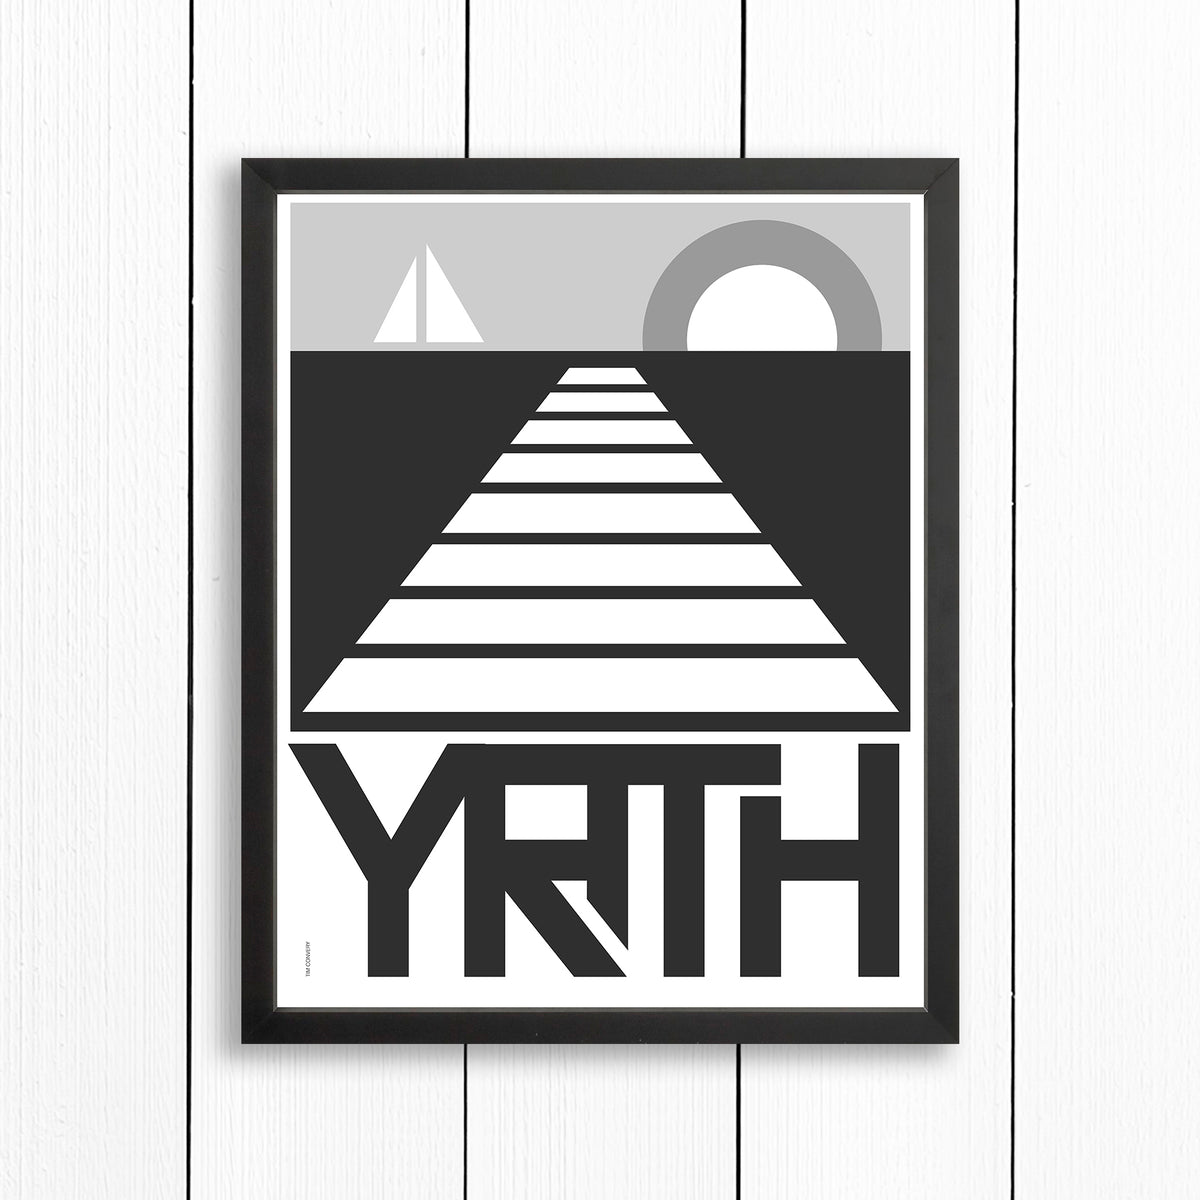 YARMOUTH / PRINT